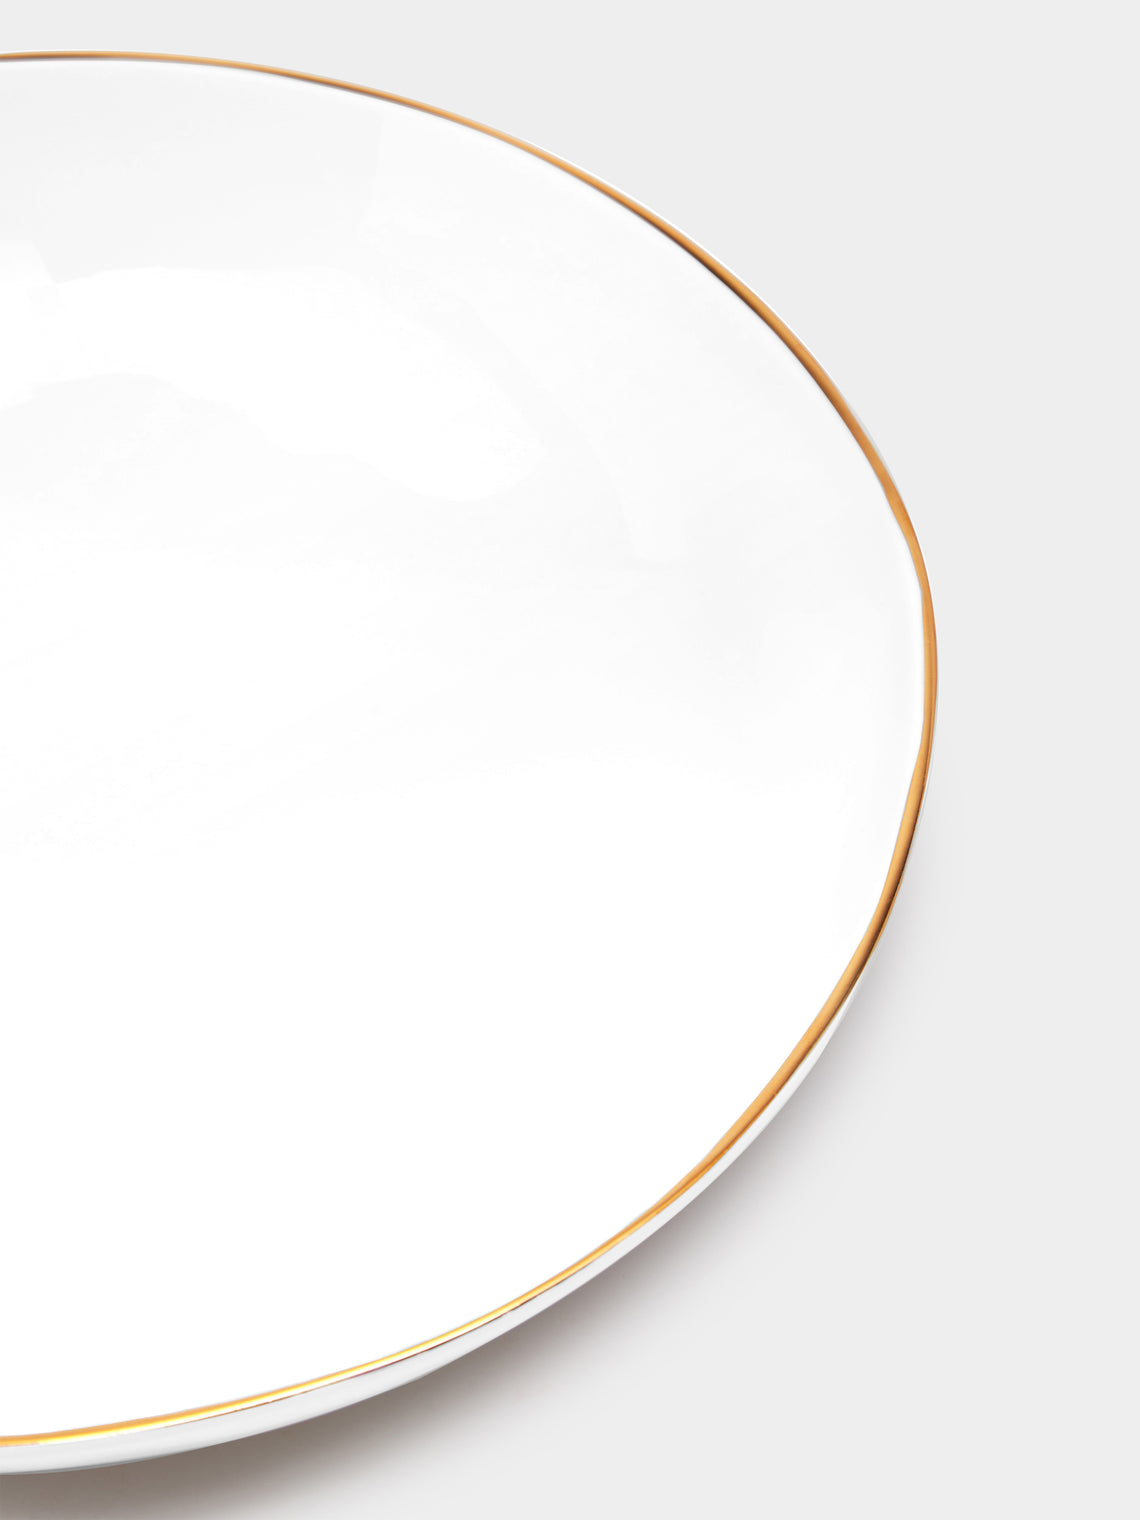 Feldspar - Hand-Painted 24ct Gold and Bone China Pasta Bowls (Set of 4) - White - ABASK